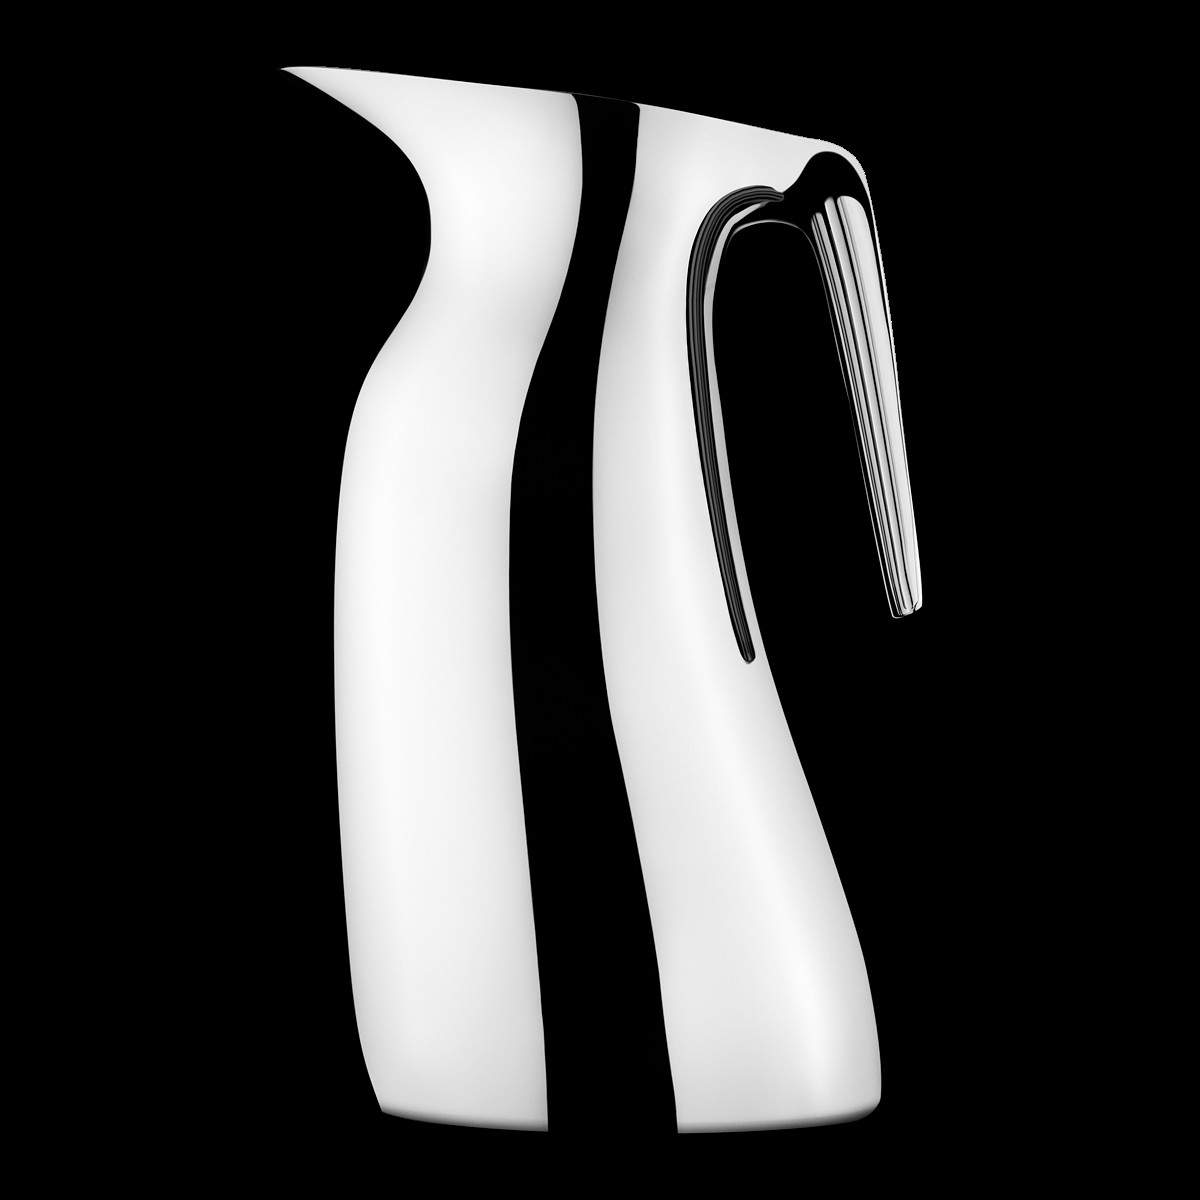 17 Spectacular Georg Jensen Indulgence Vase 2024 free download georg jensen indulgence vase of beak pitcher thermos jug in stainless steel georg jensen inside pack 3583608 1200 0